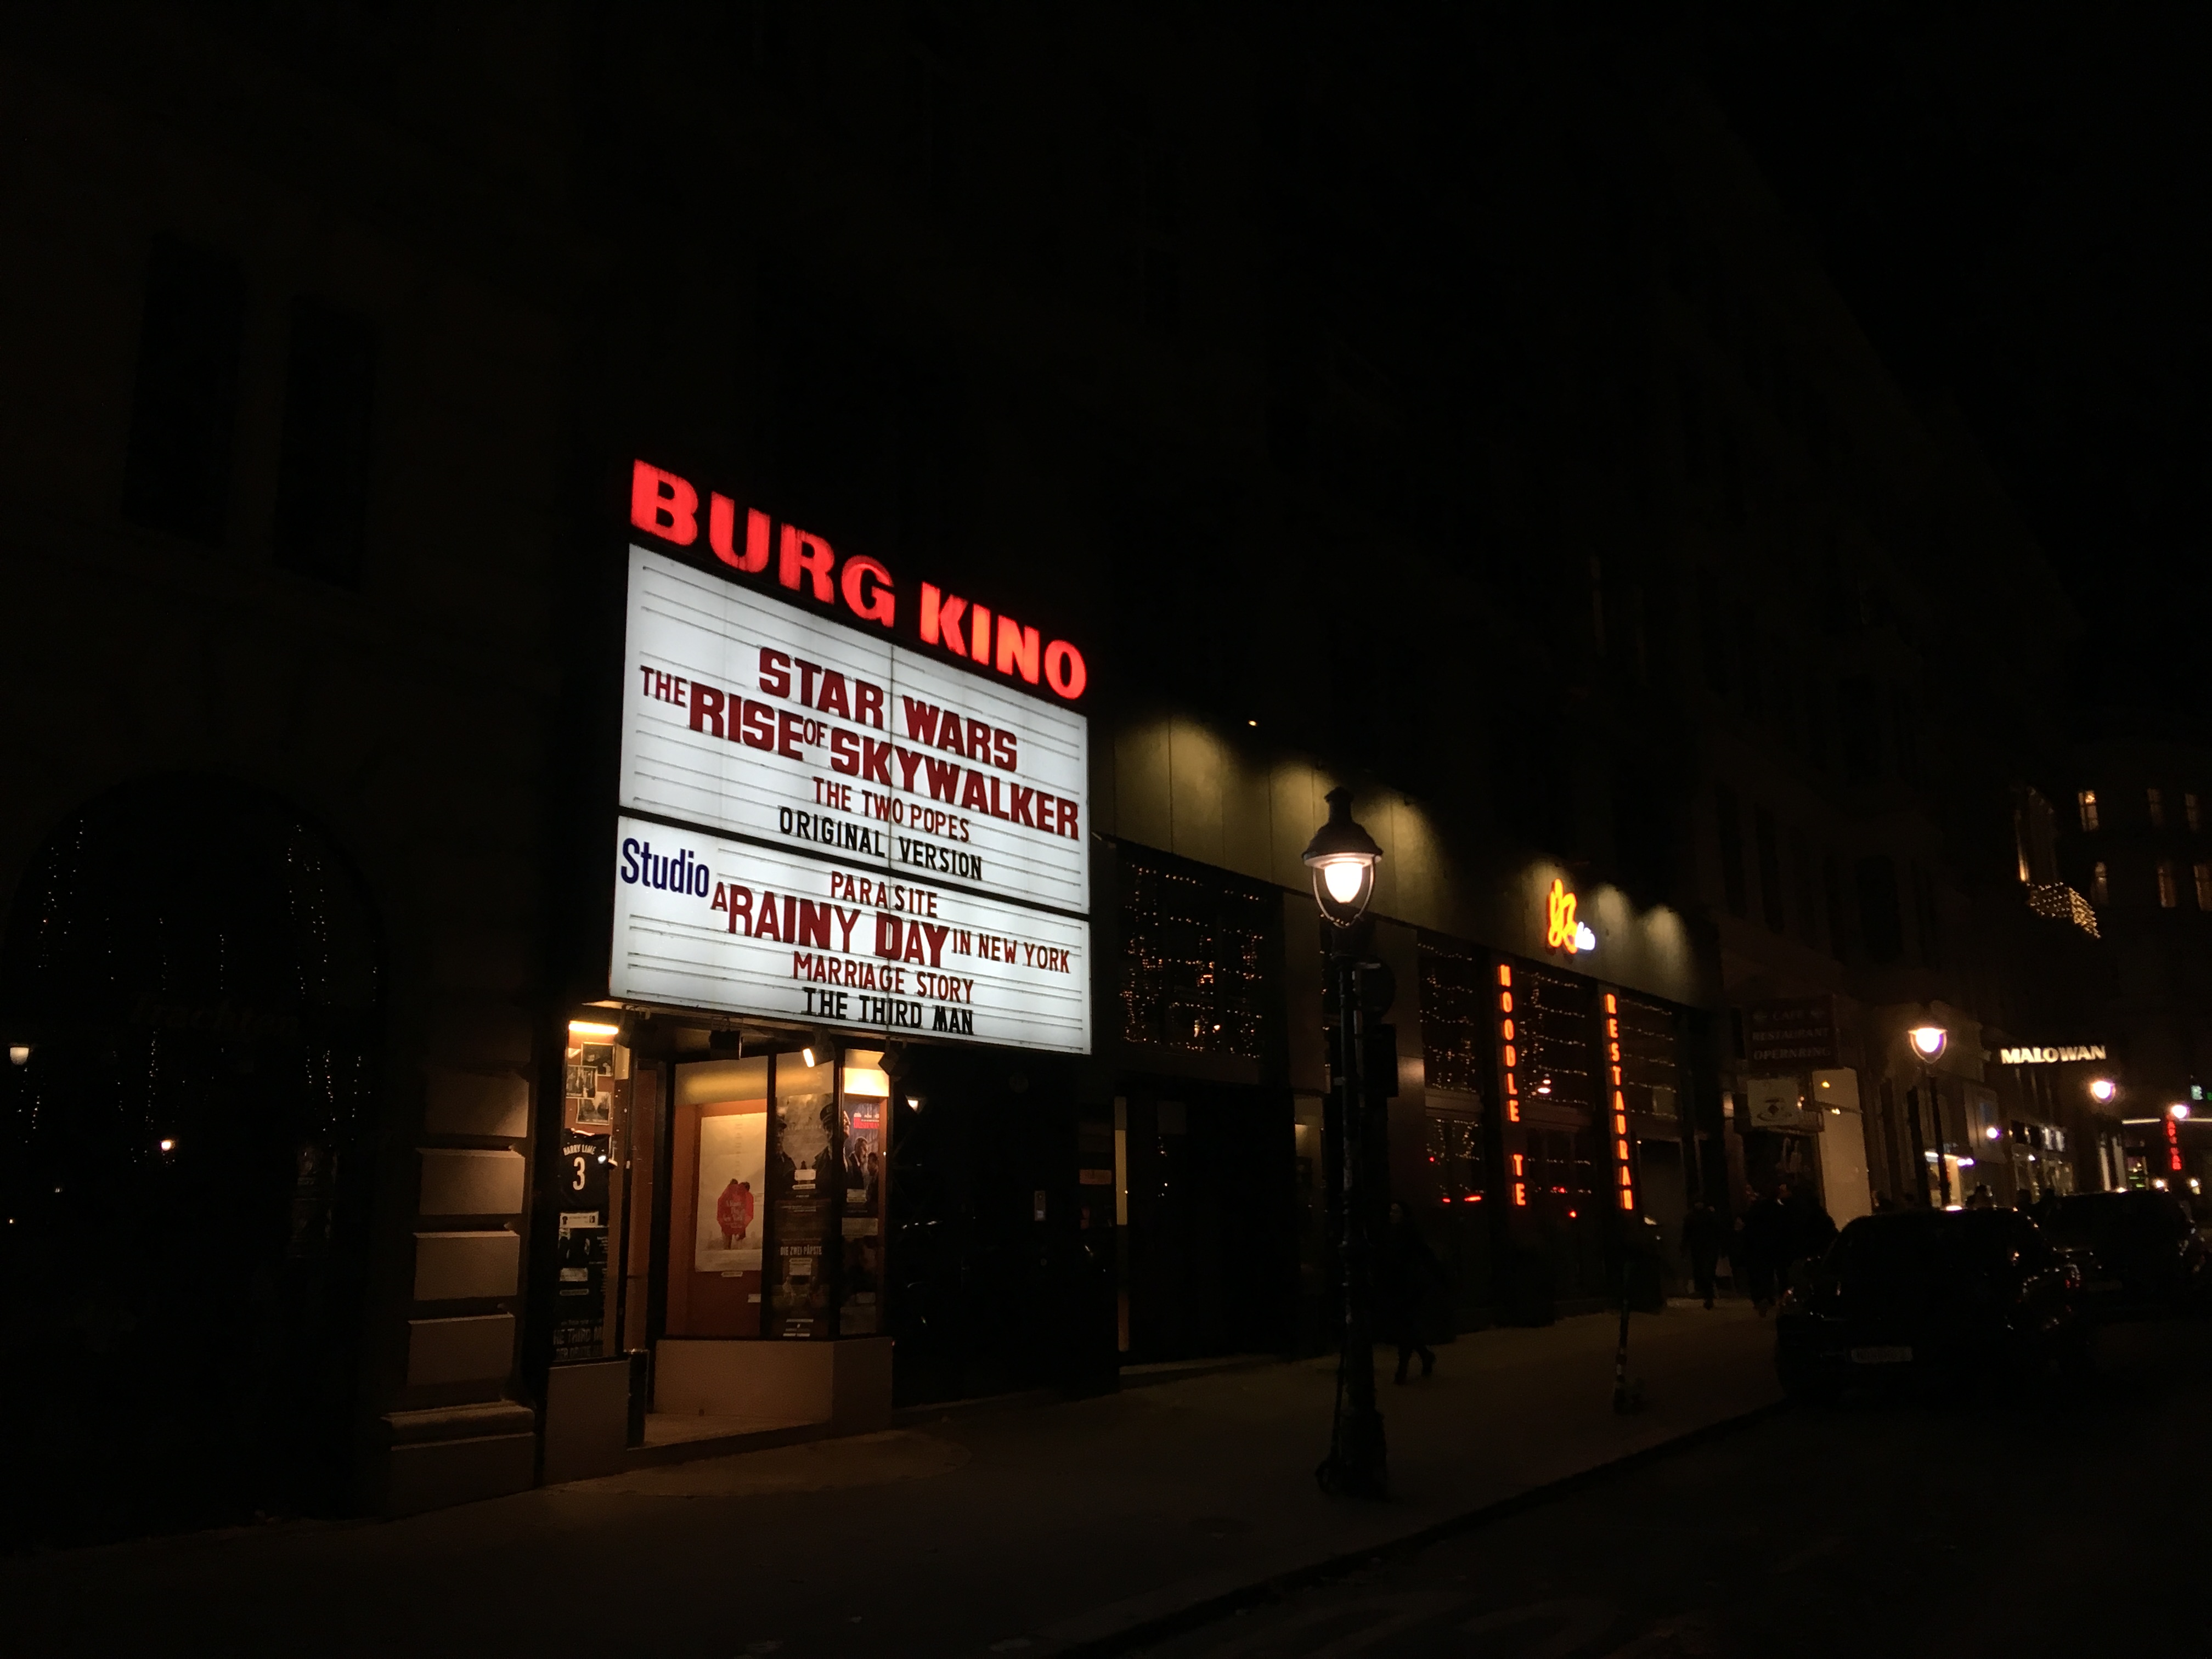 Berg Kino exterior